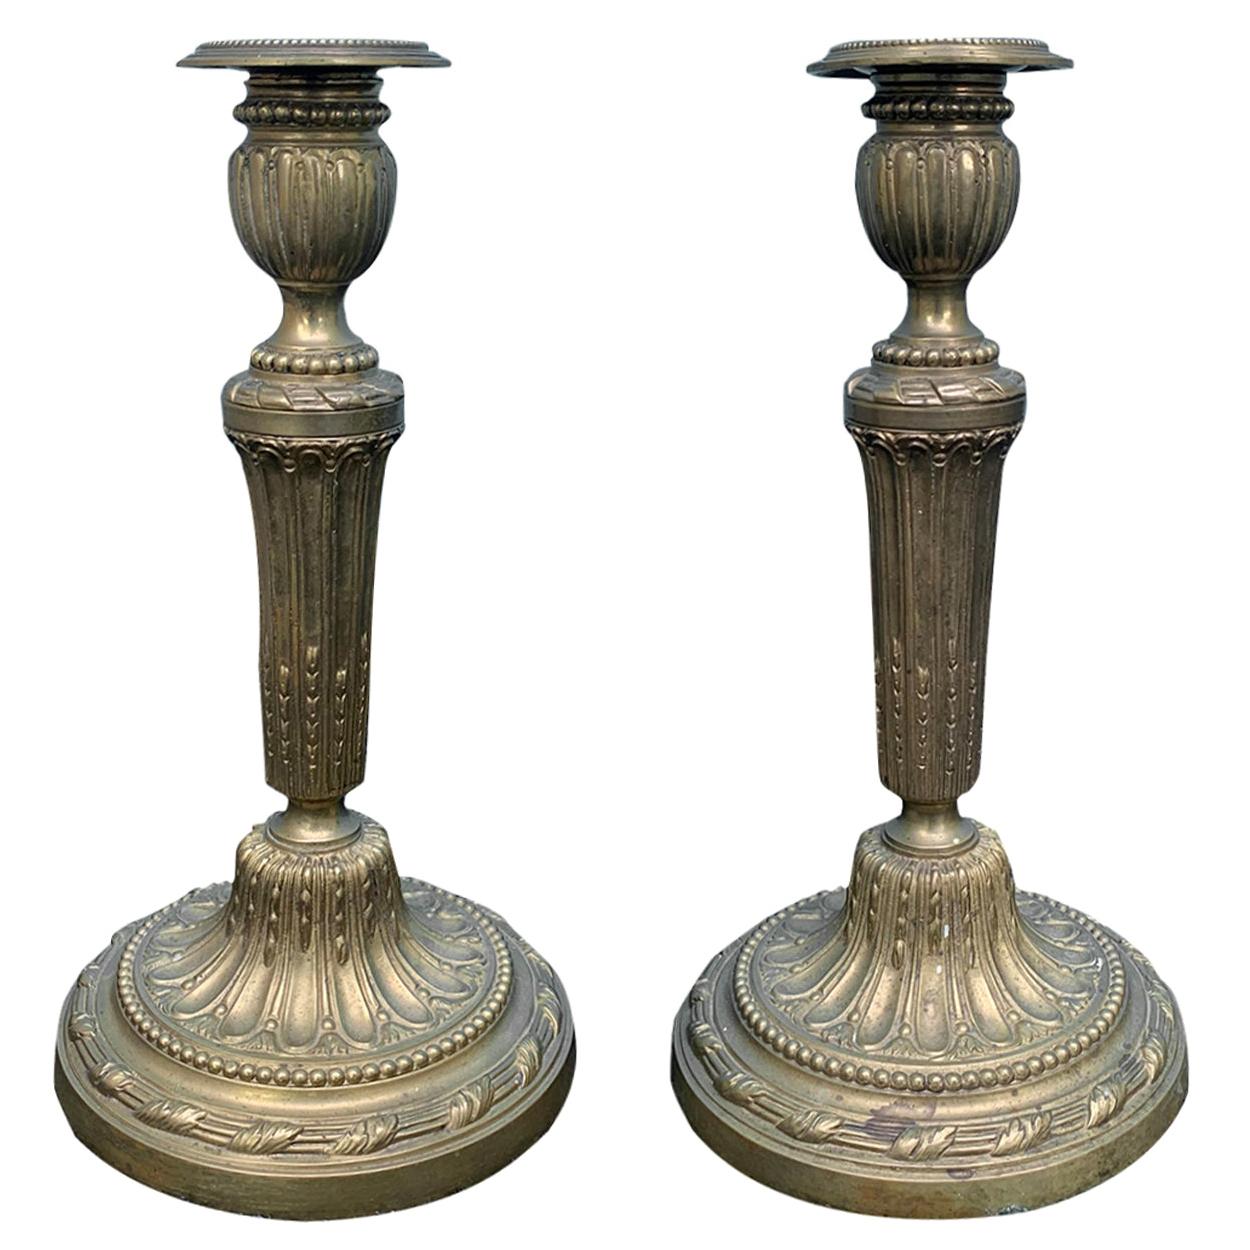 Pair of 19th Century Louis XVI Style Bronze Candlesticks